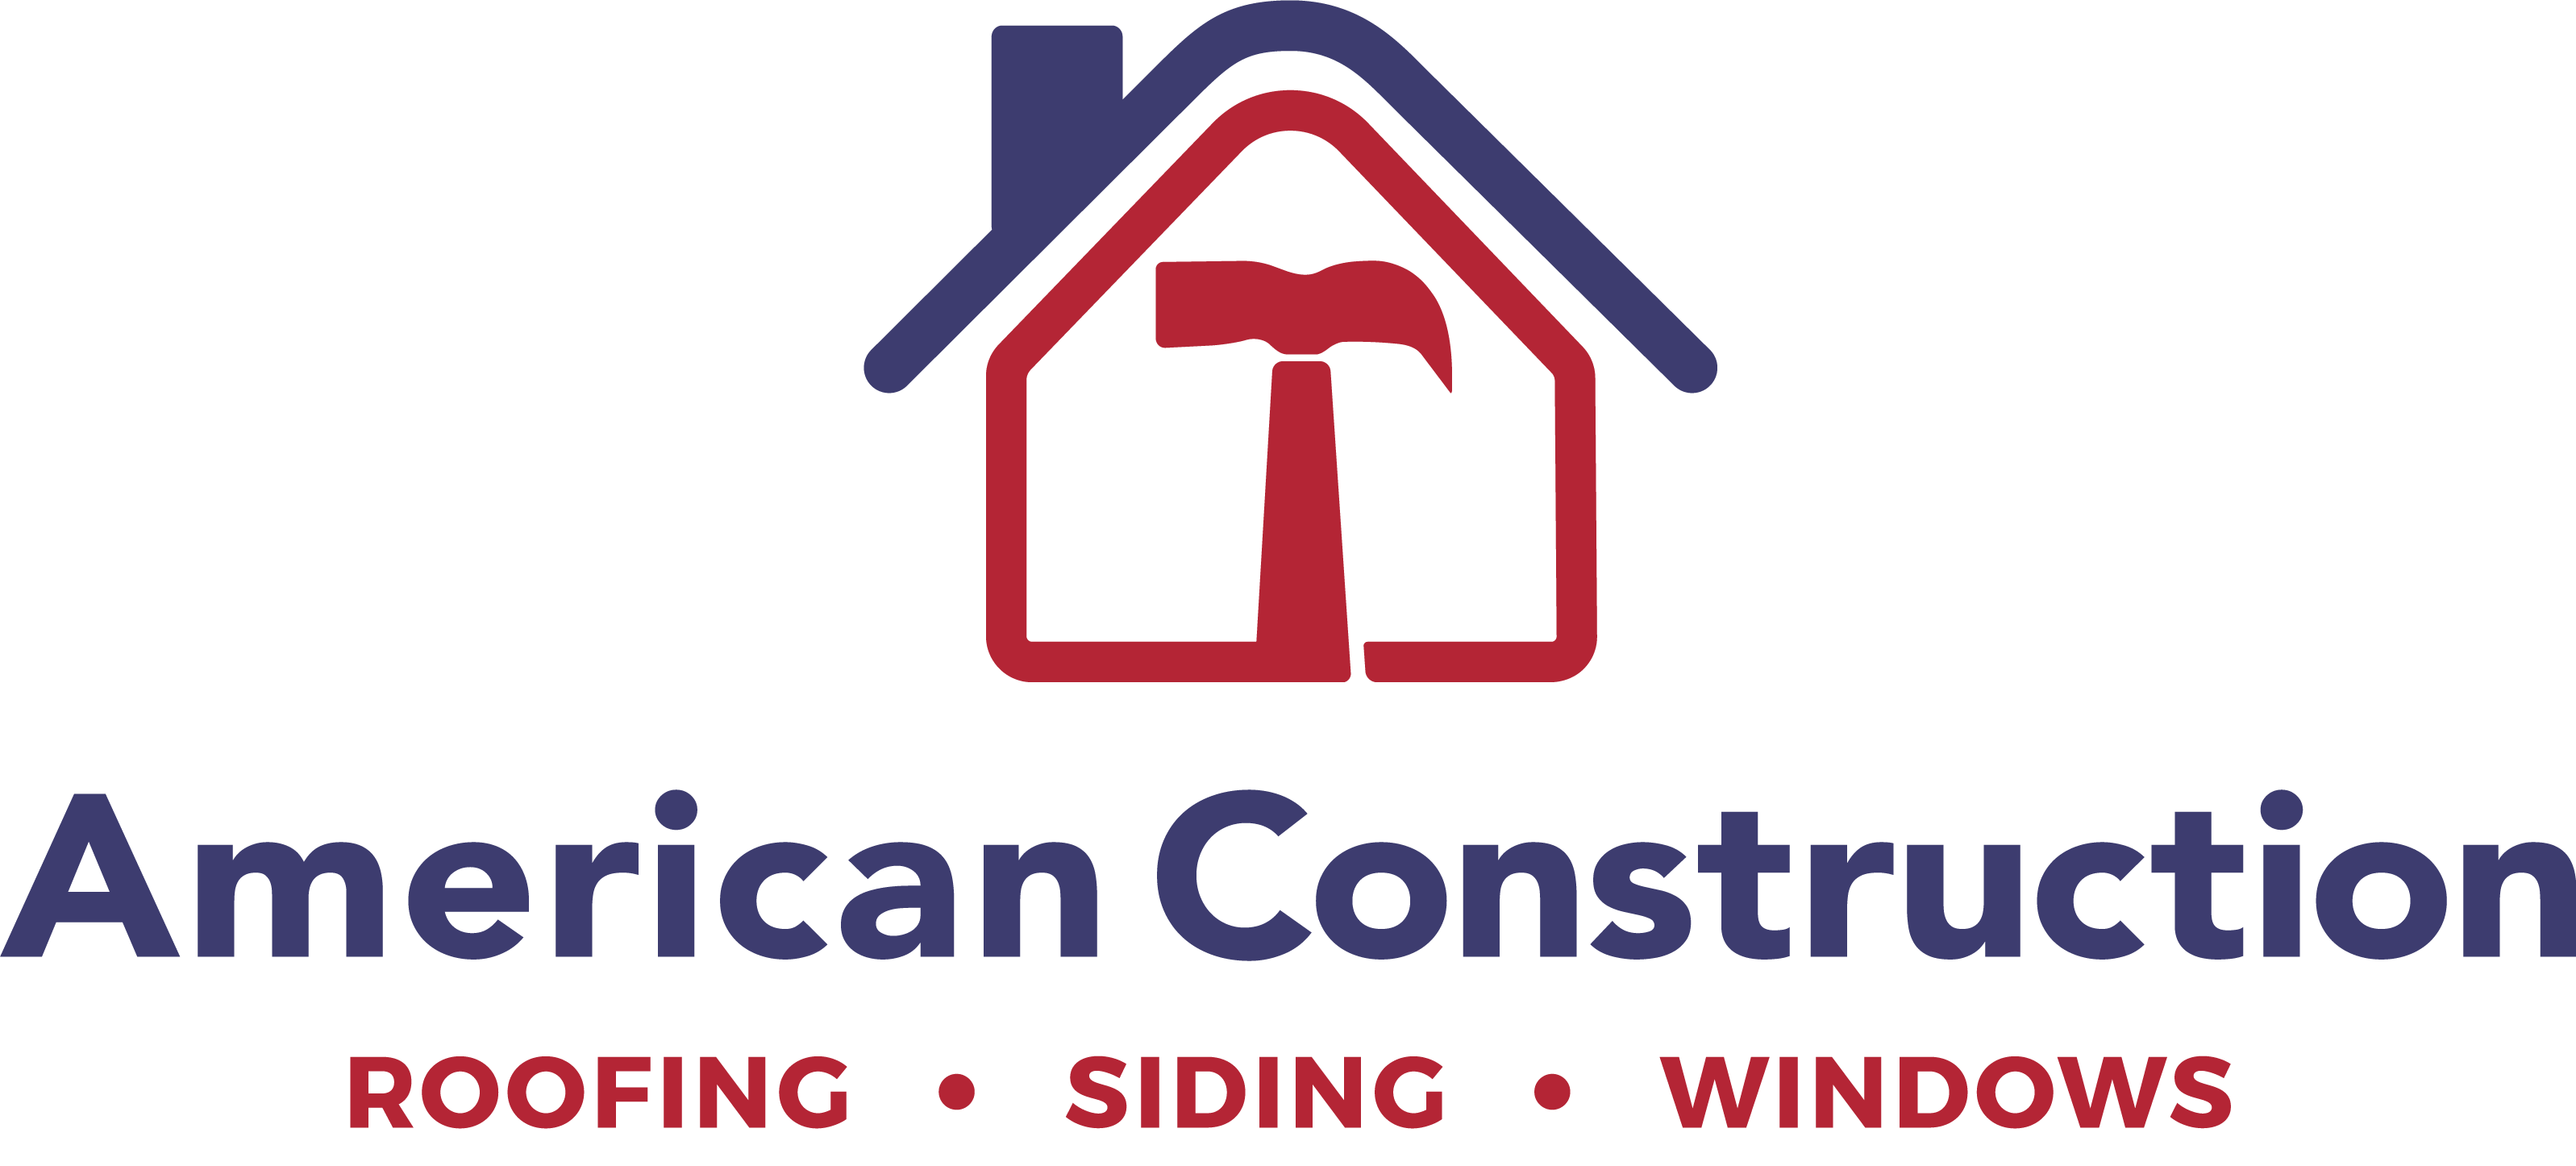 American Construction Logo Final